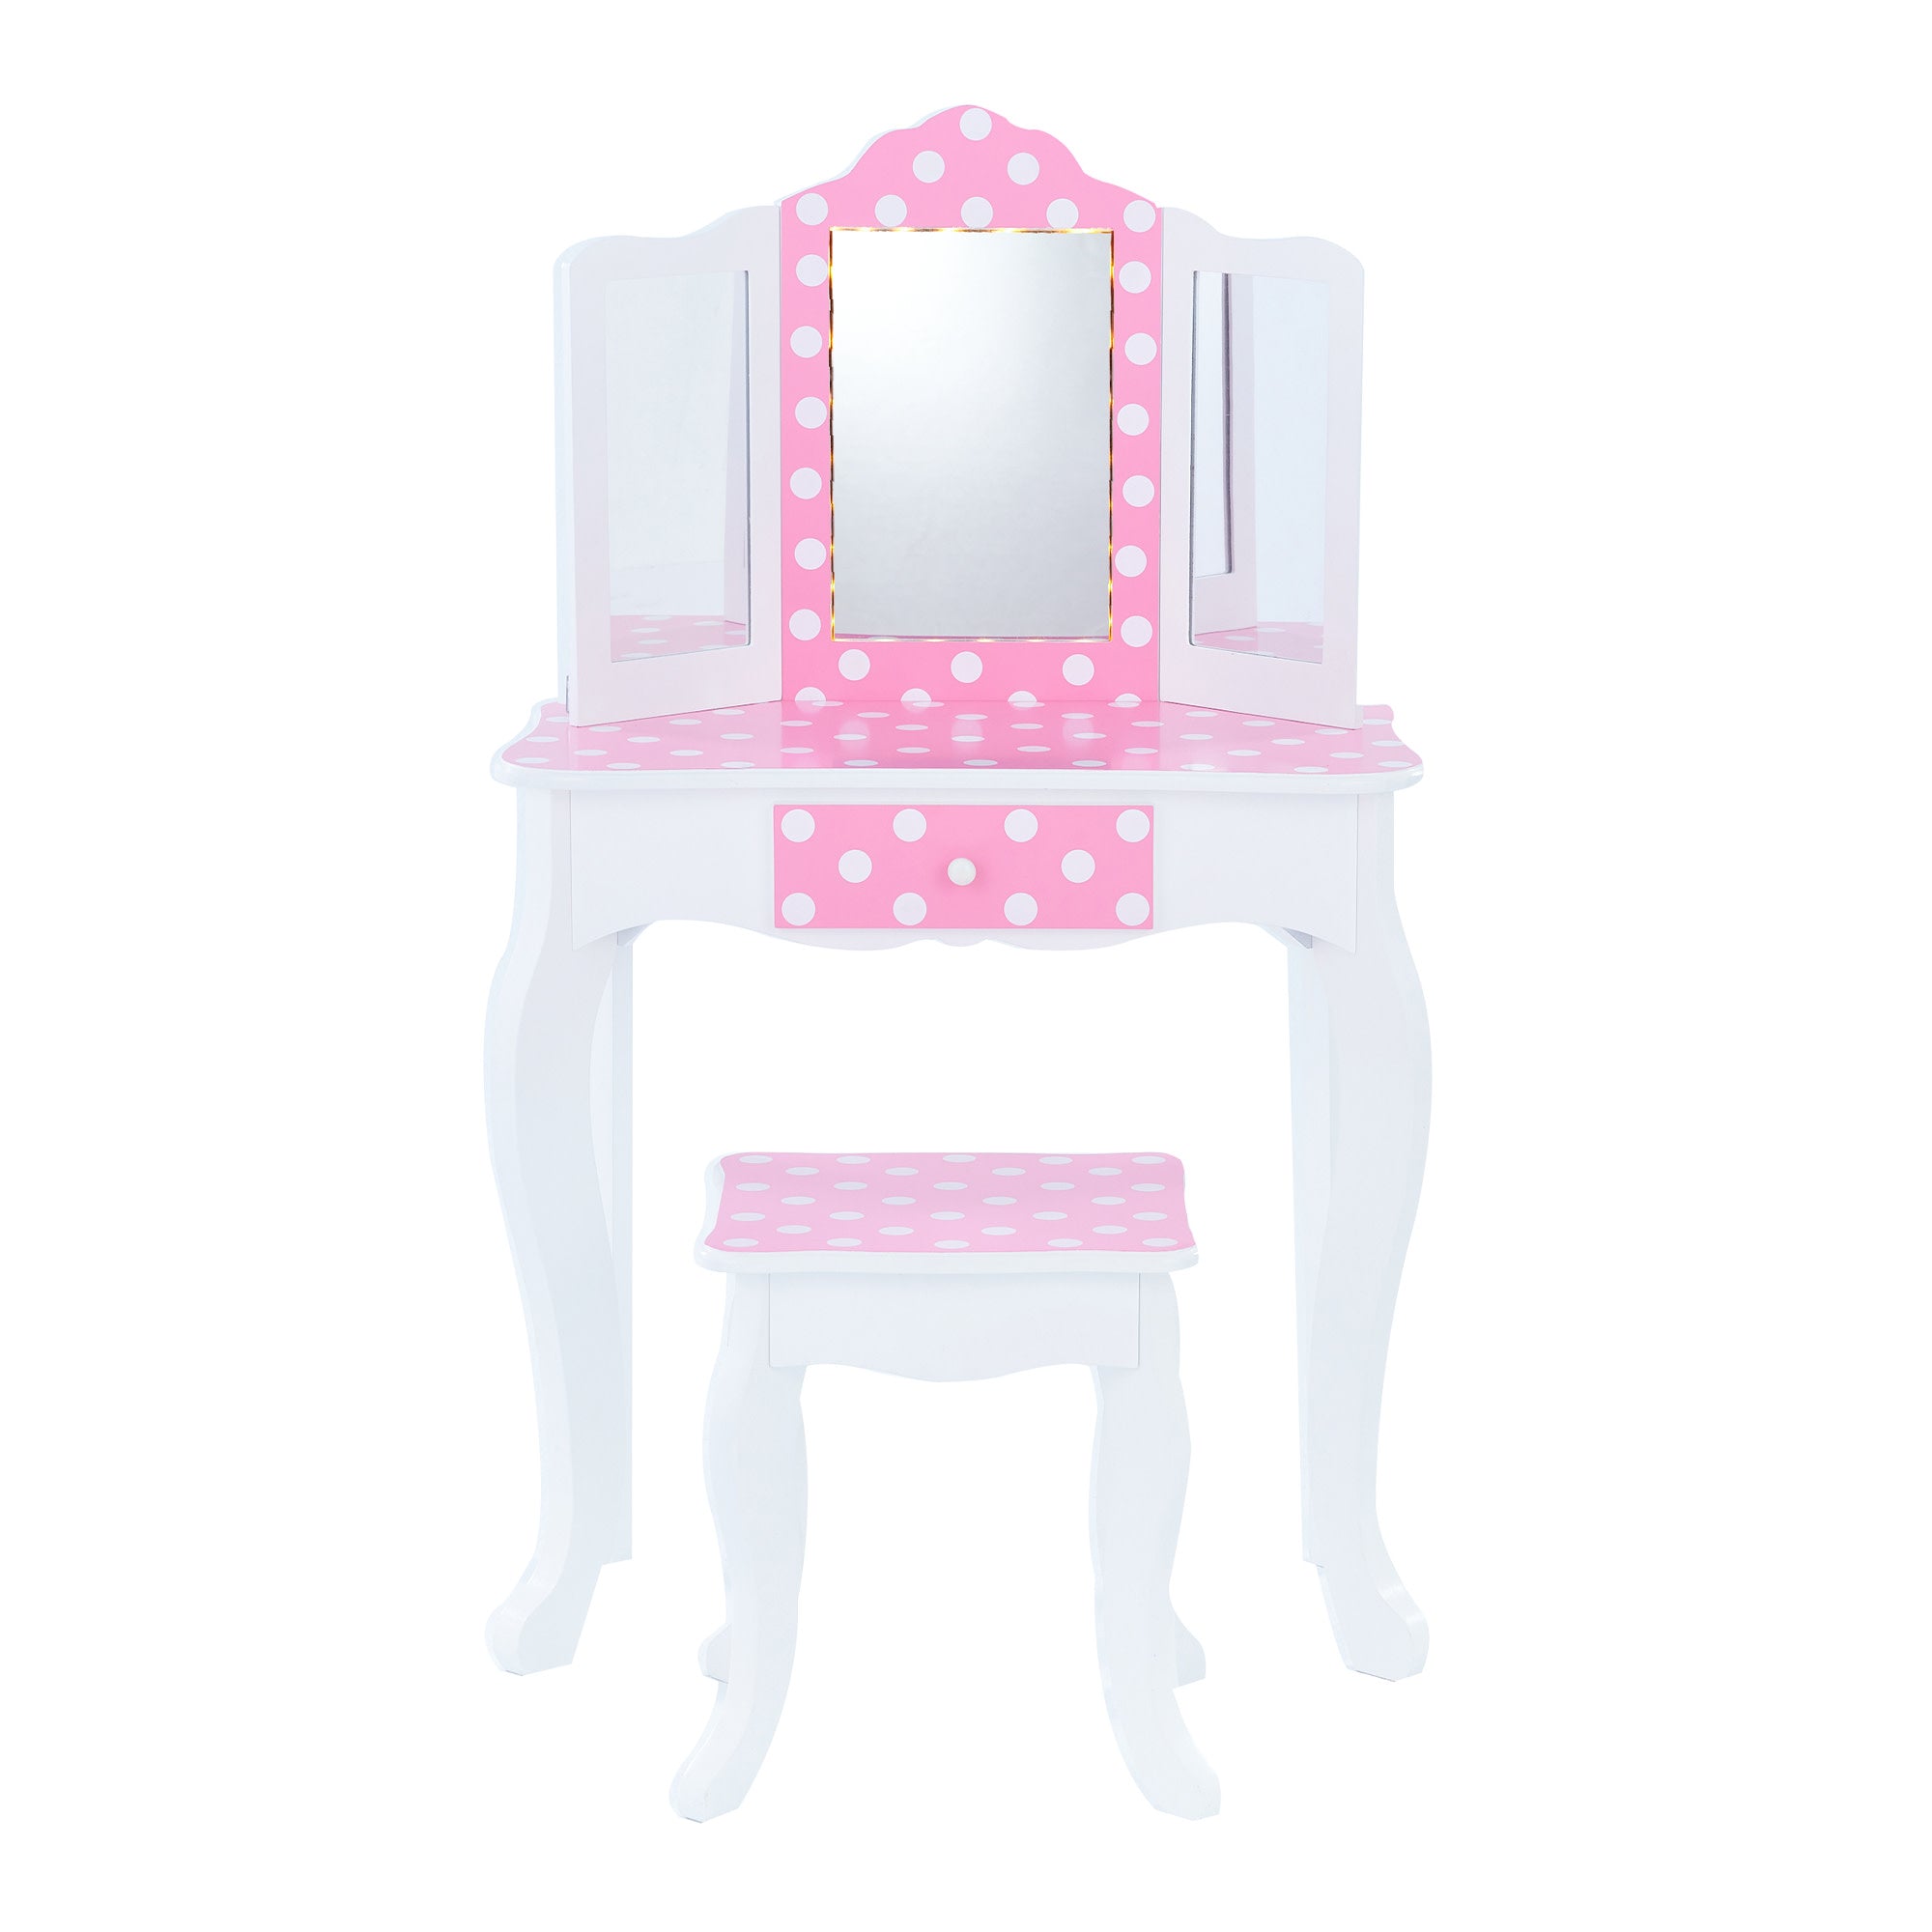 Fantasy Fields Gisele Polka Dot Prints Play Vanity Set with LED Mirror Light, Pink/White